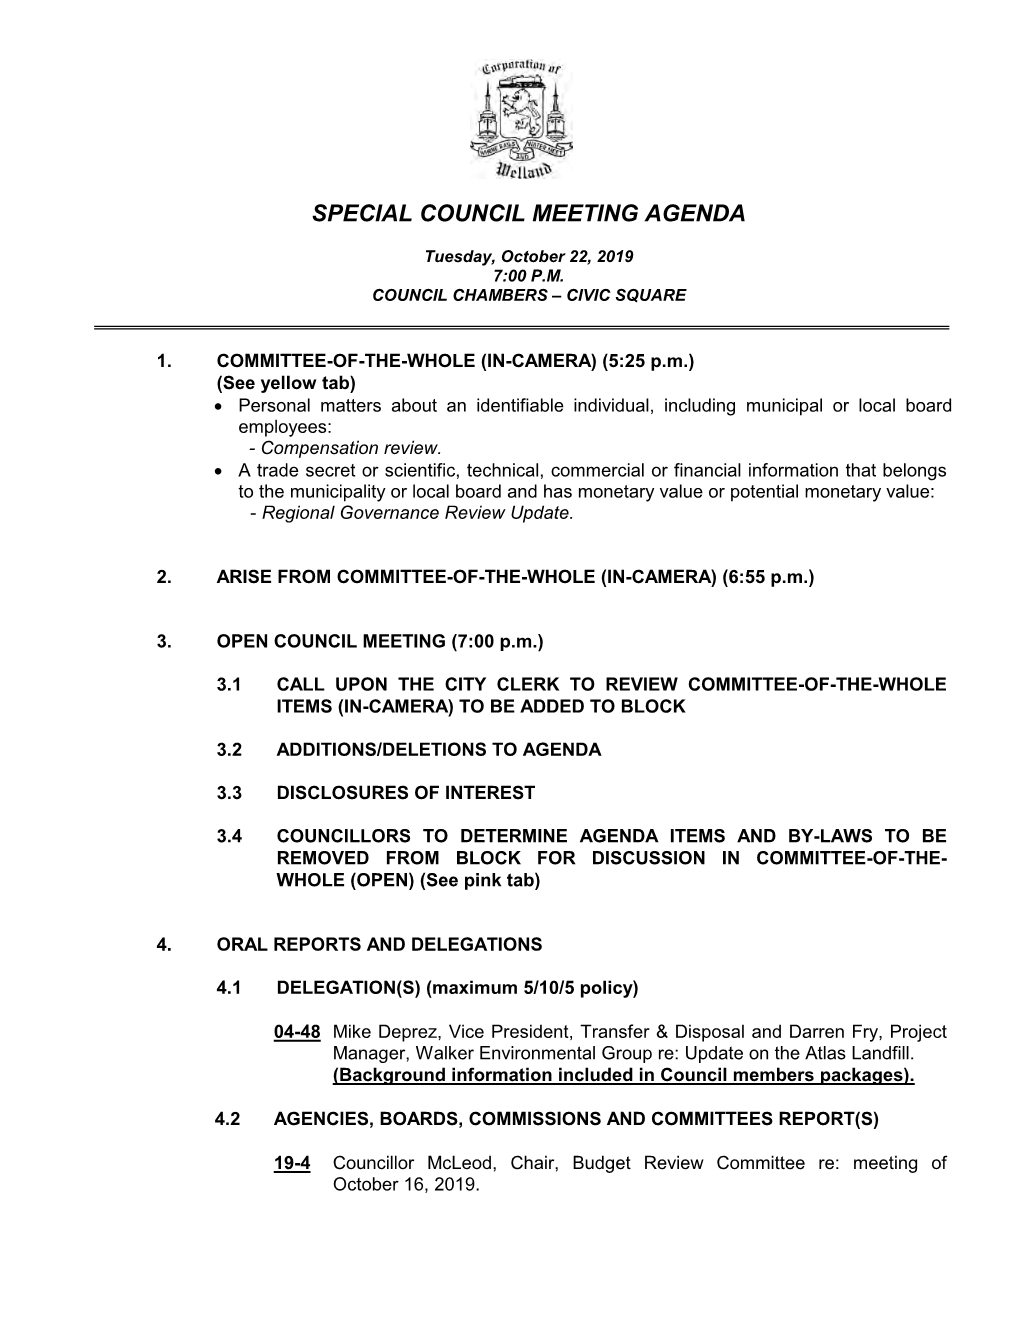 Special Council Meeting Agenda October 22, 2019